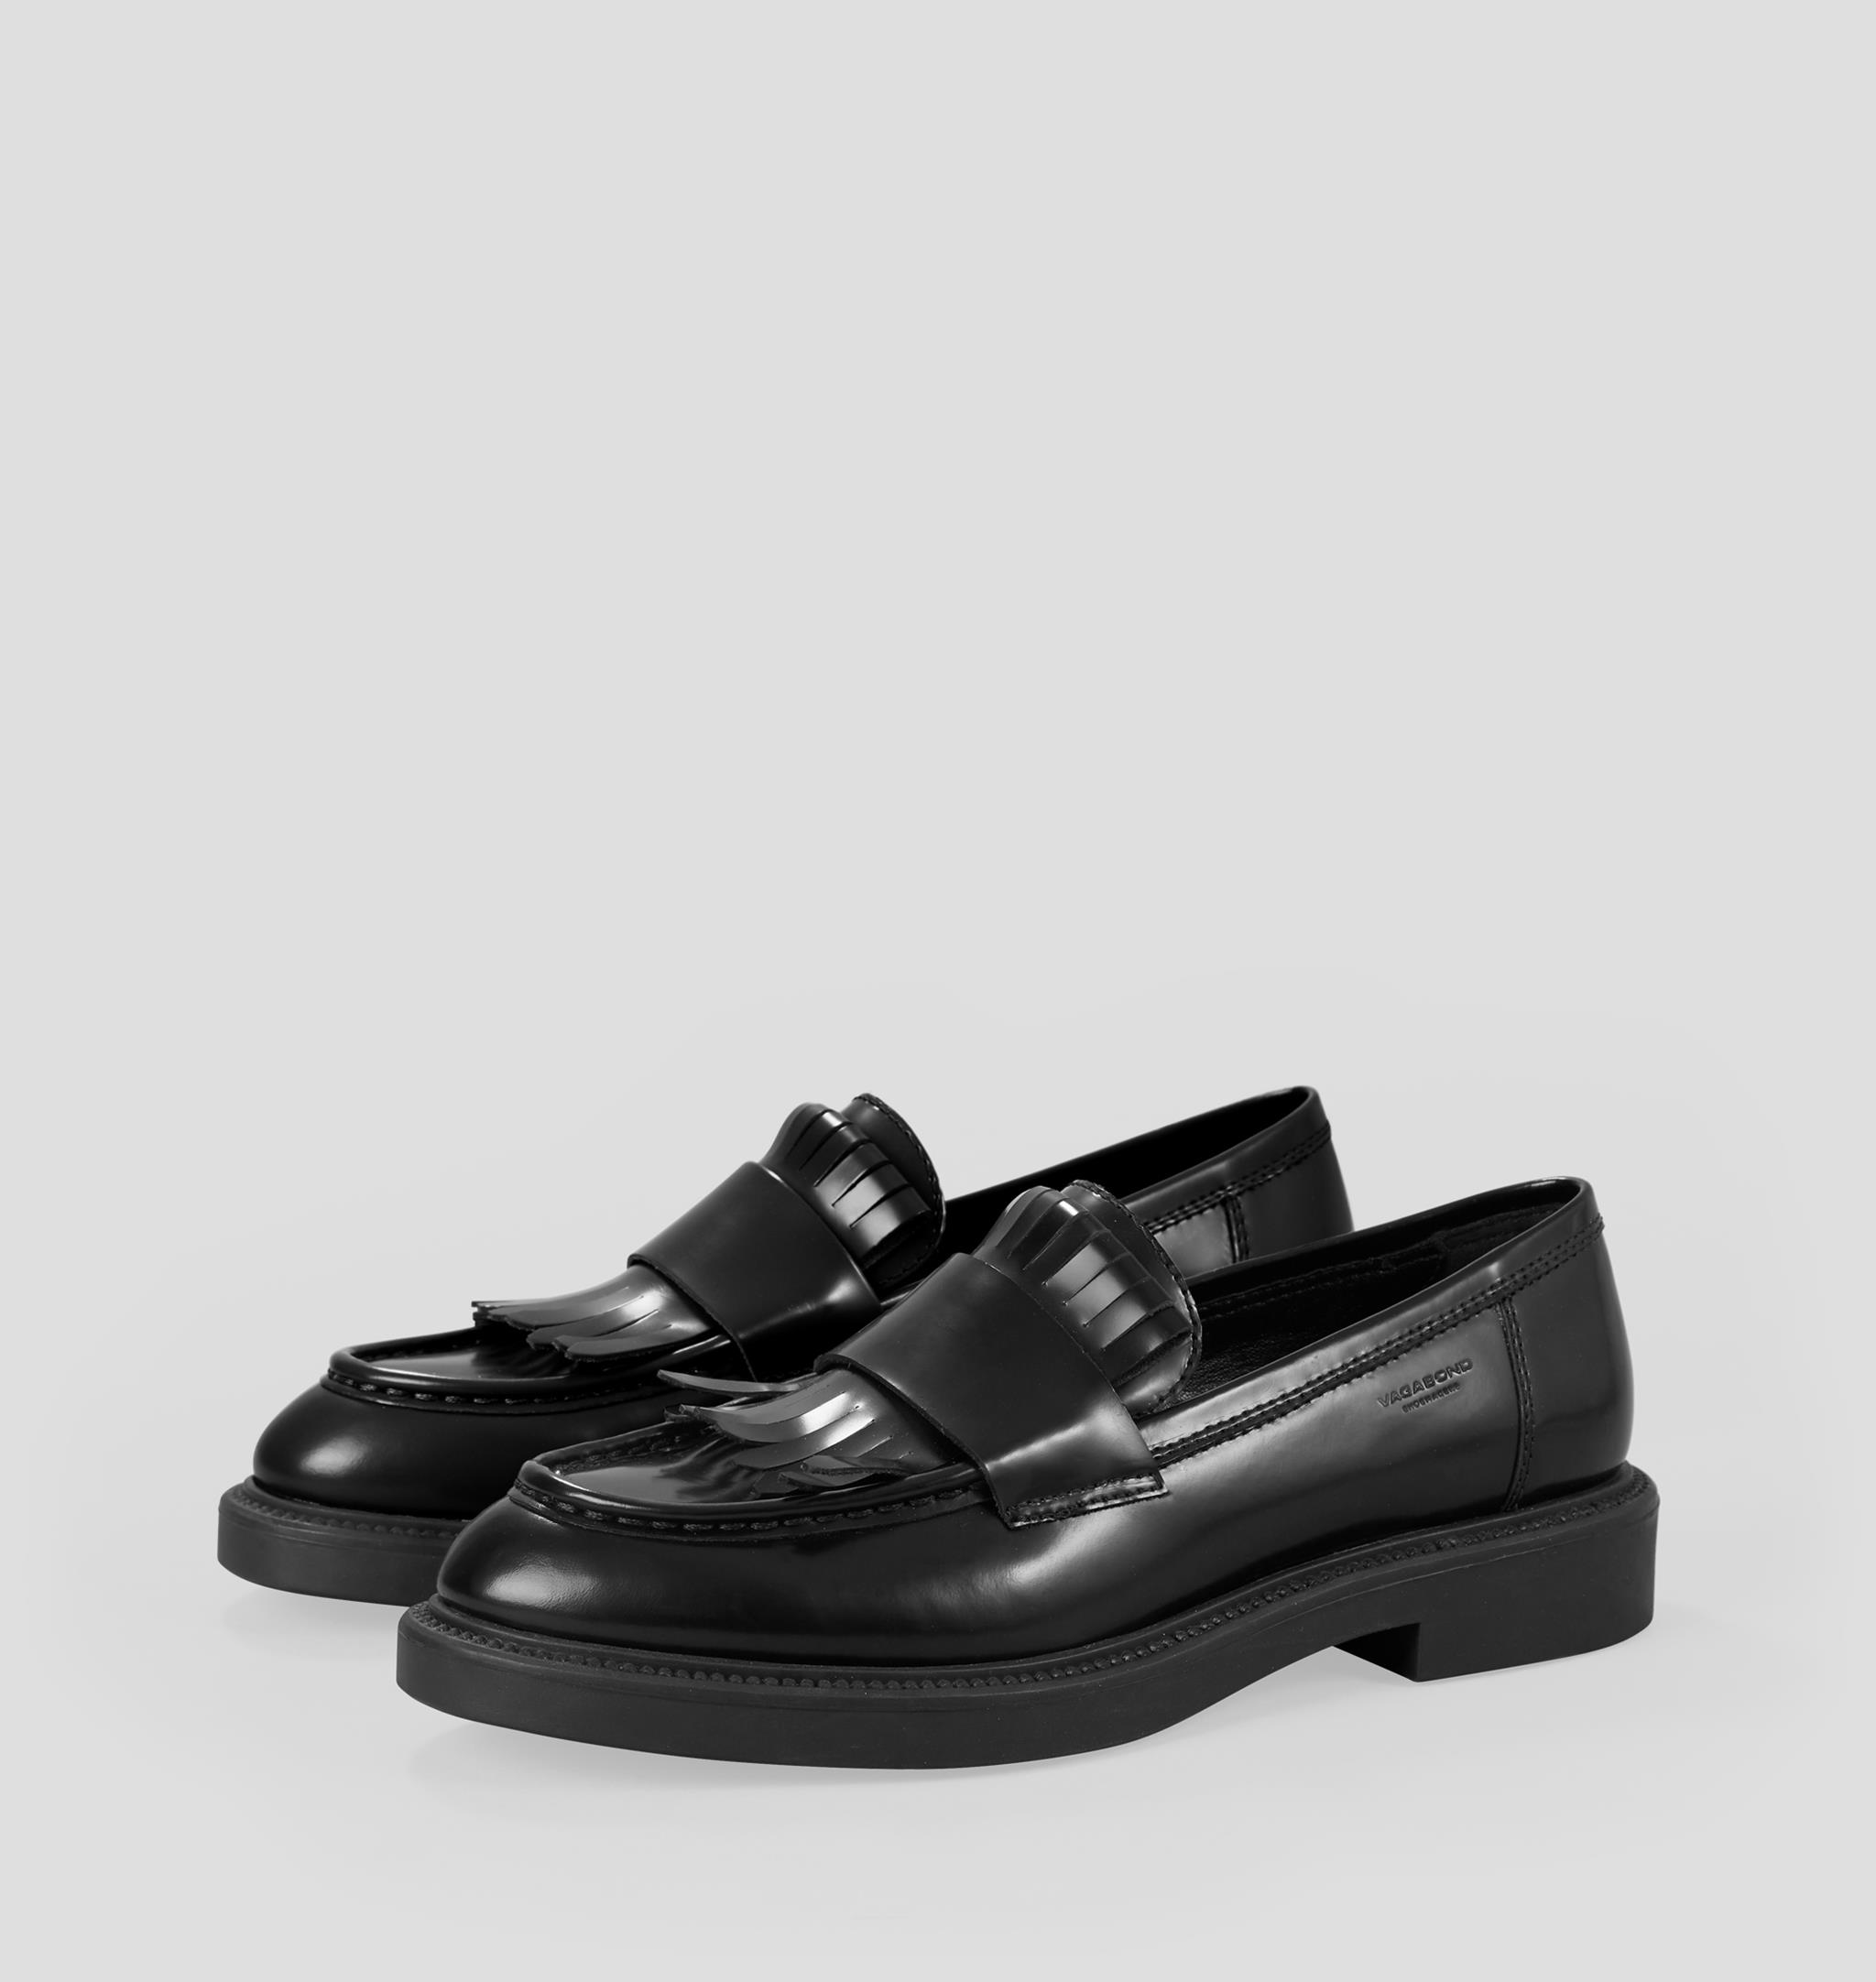 Alex w Polished leather Shoes - Black - Vagabond